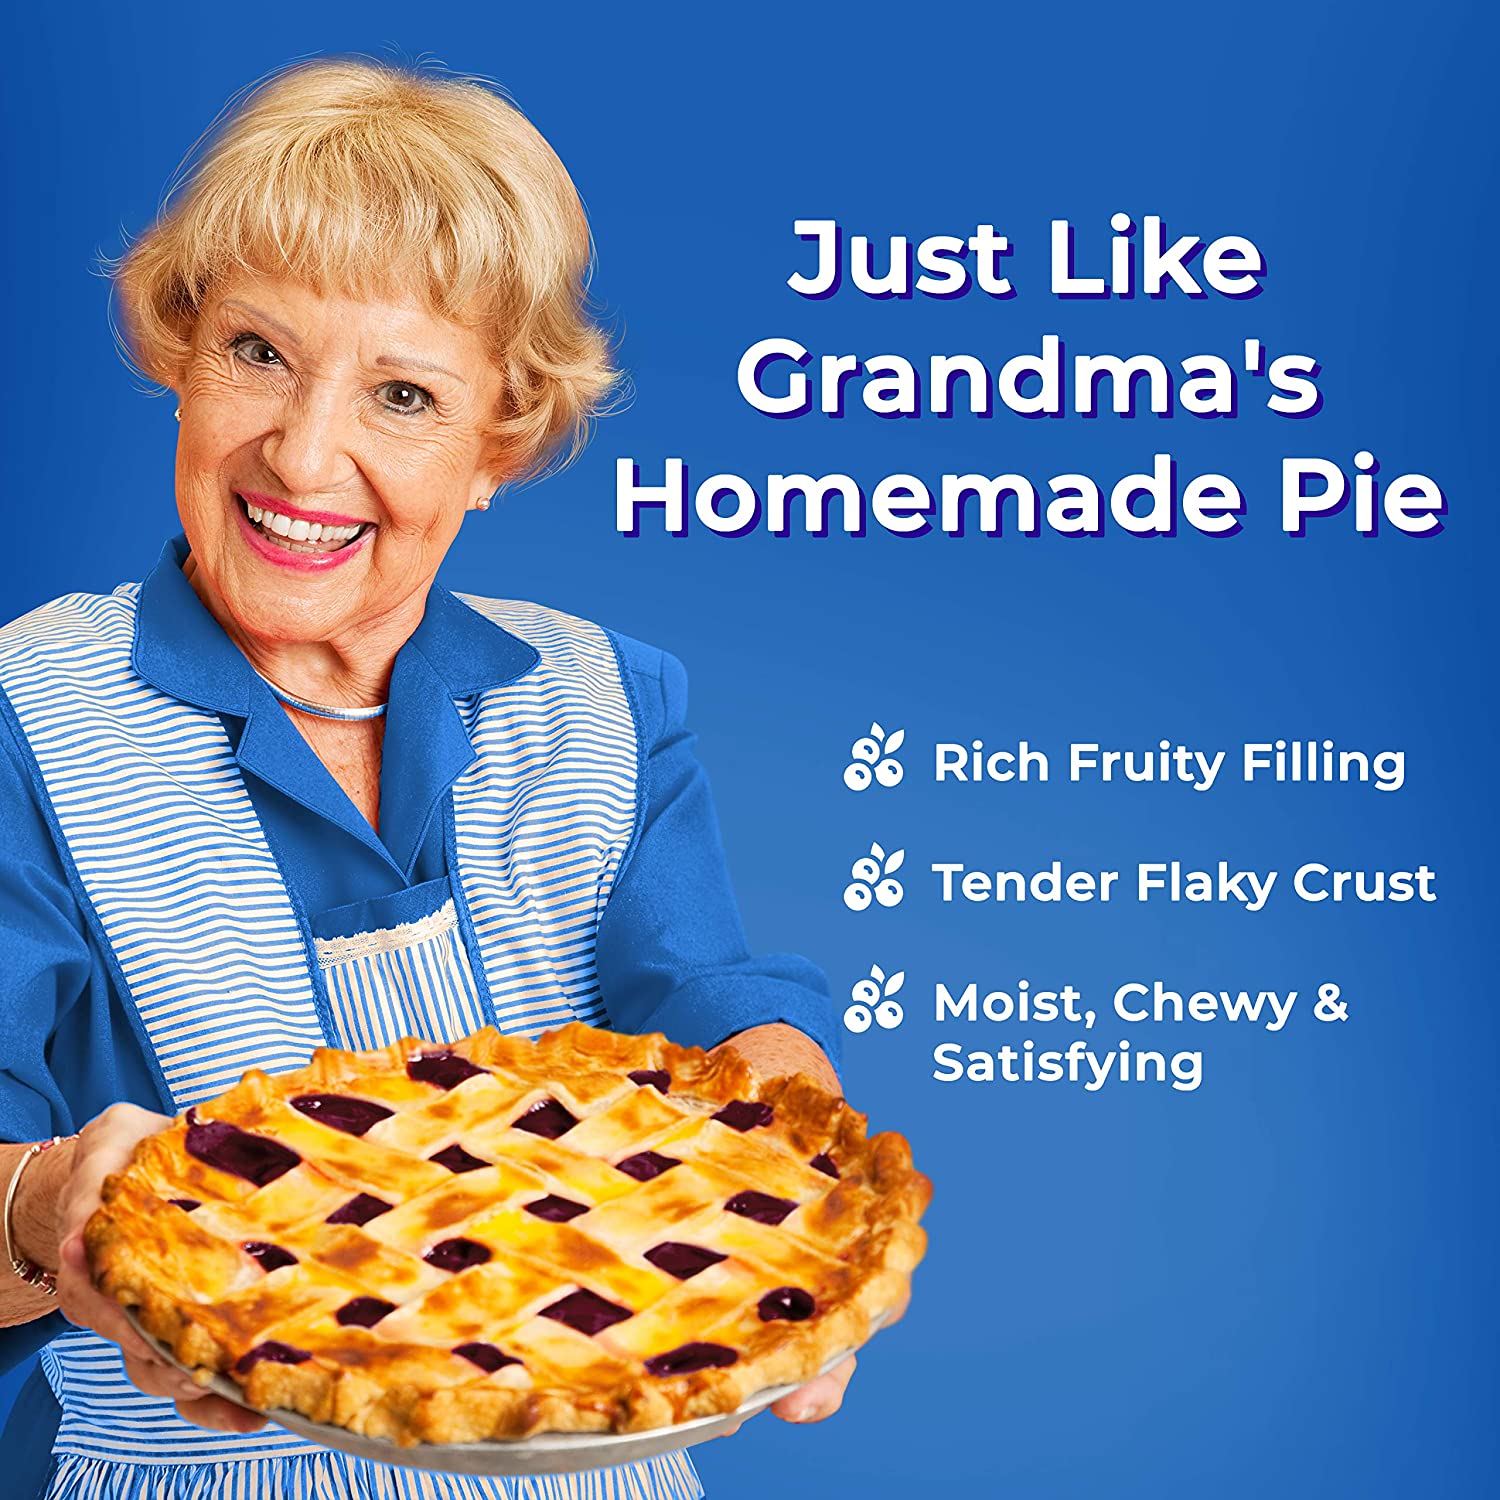 Grandma's blueberry pie